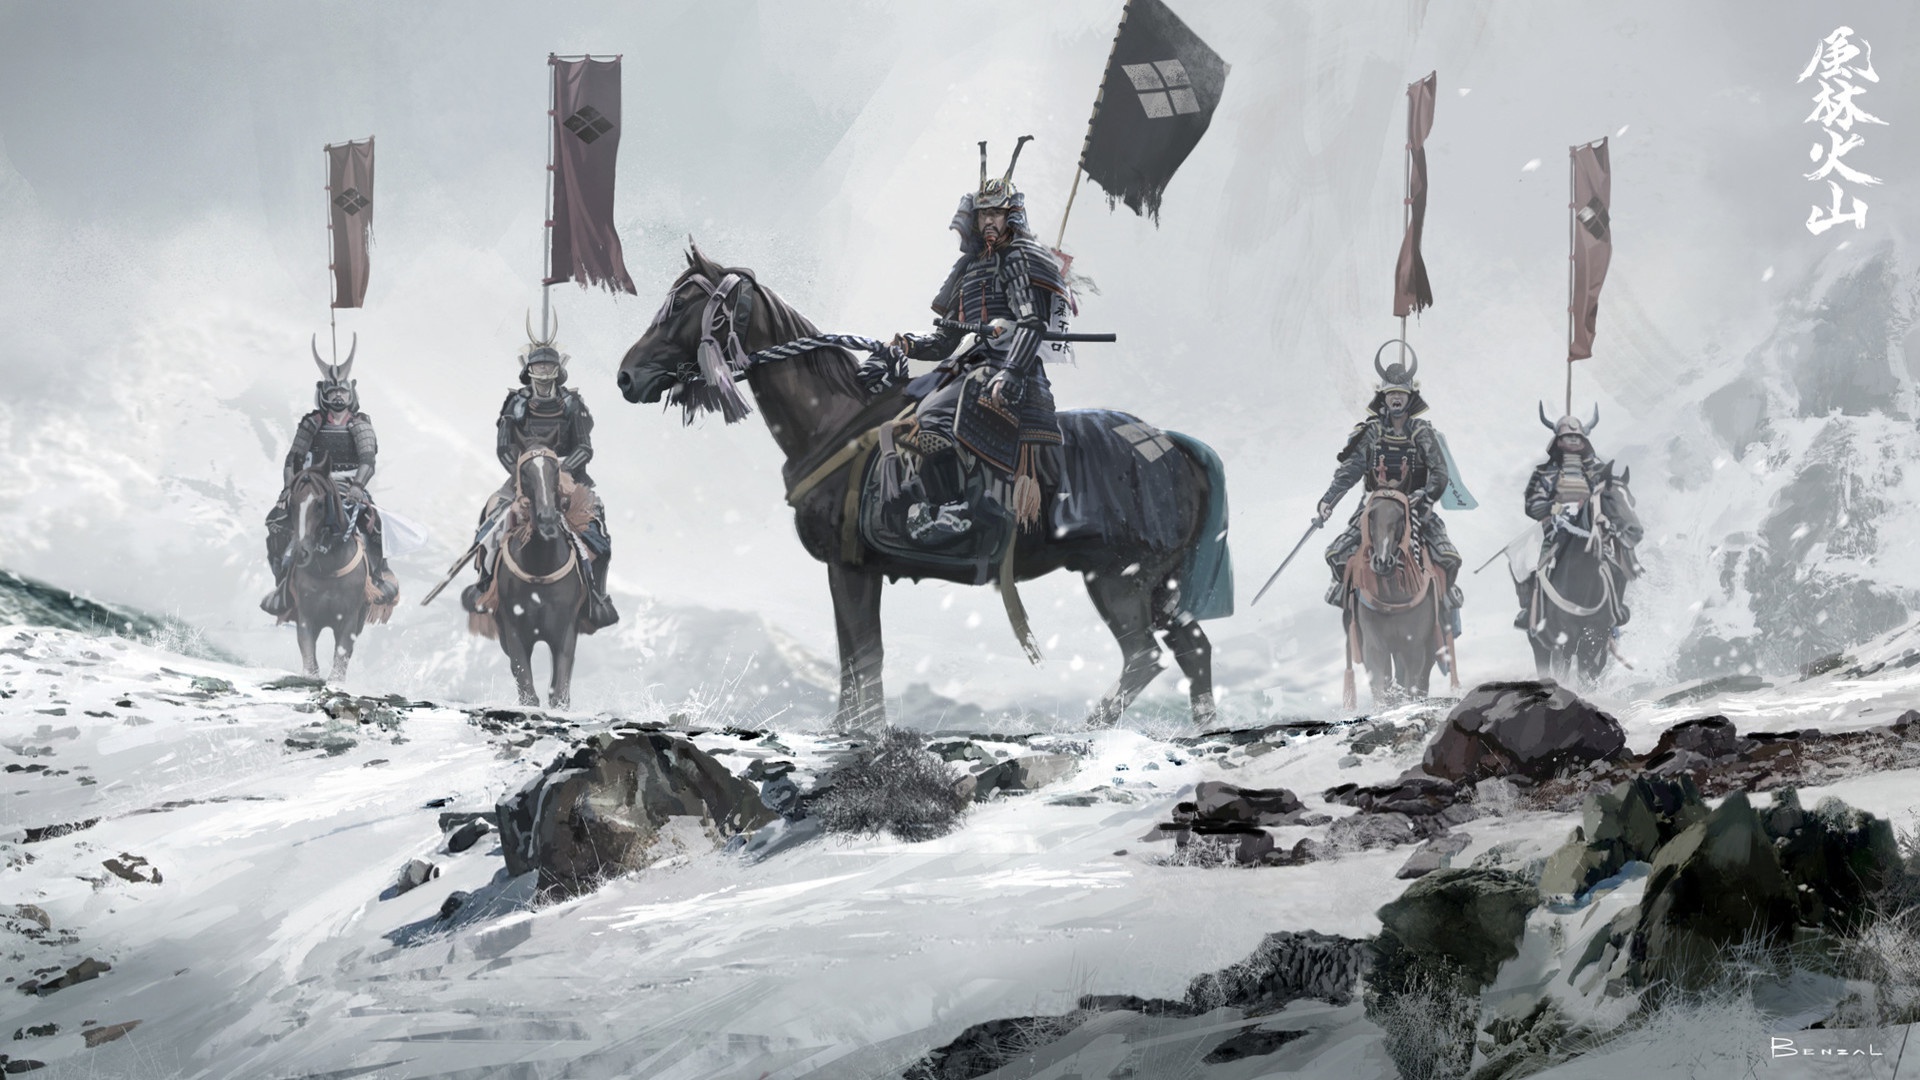 General 1920x1080 fantasy art samurai artwork horse snow mountains banner David Benzal